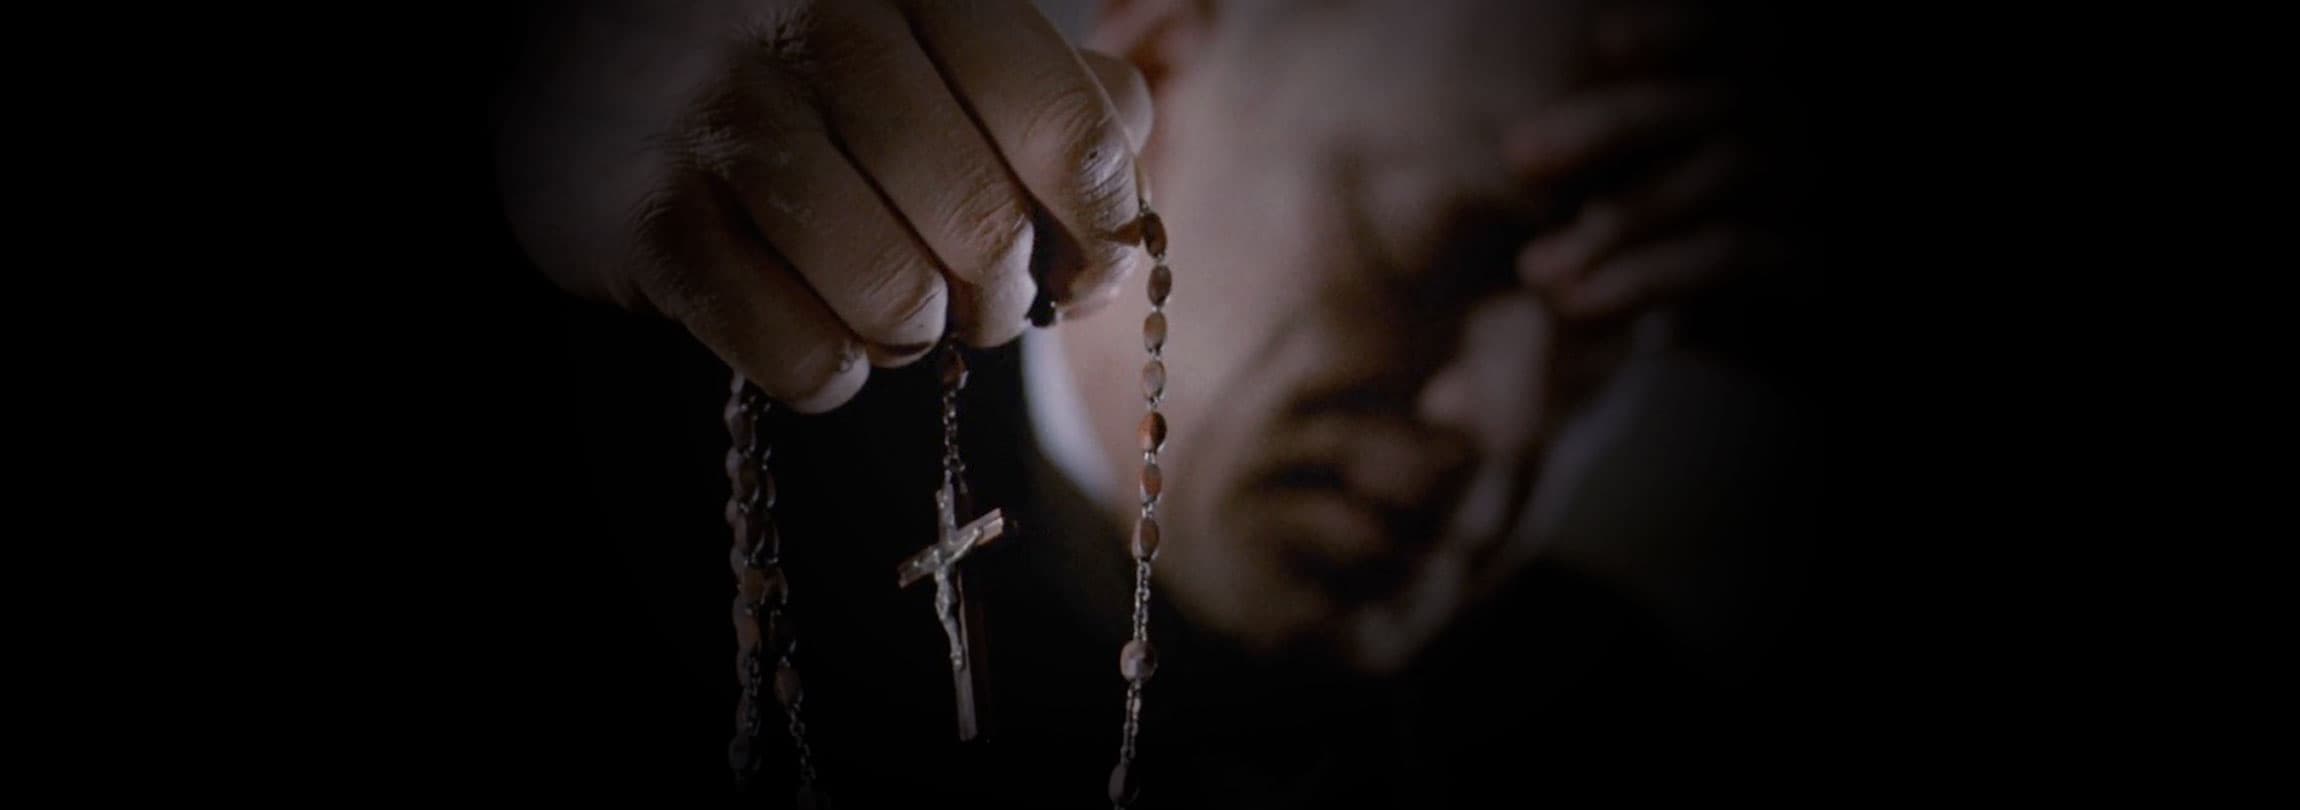 “O satanismo aumenta porque se reza pouco”, diz exorcista